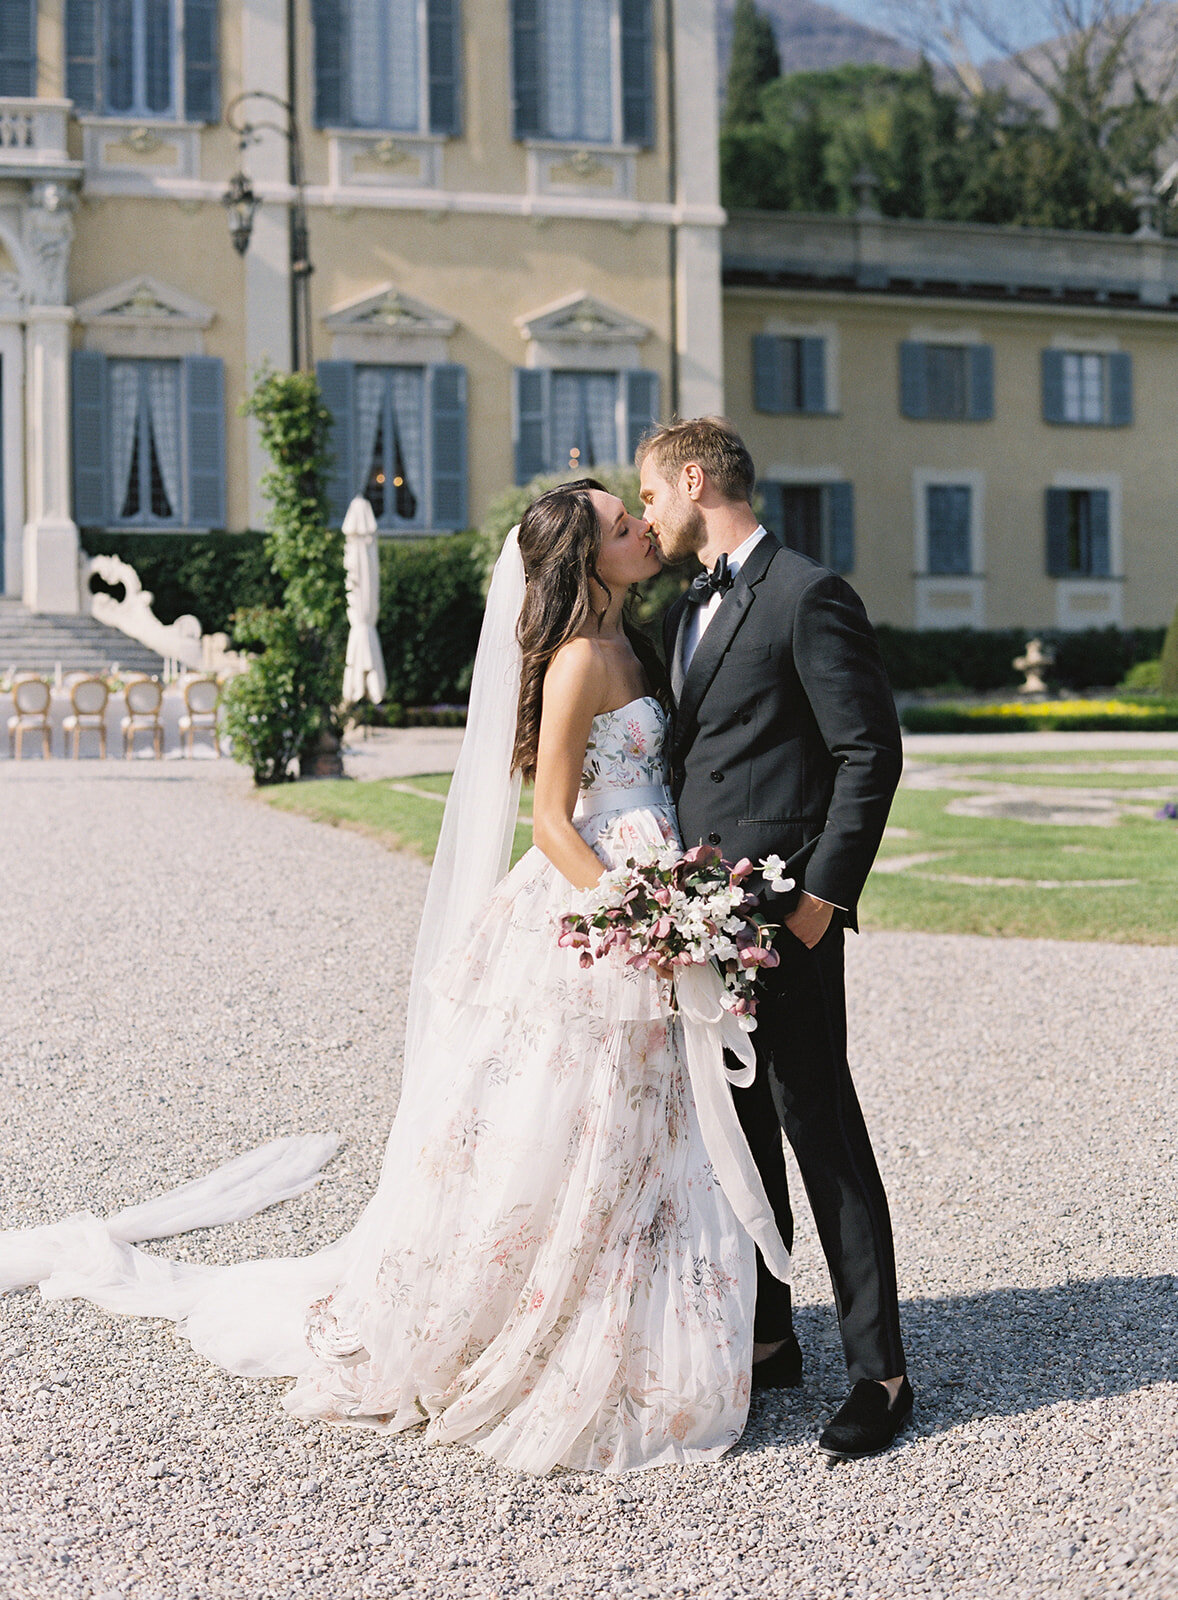 Villa-Sola-Cabiati Wedding Photographer-132